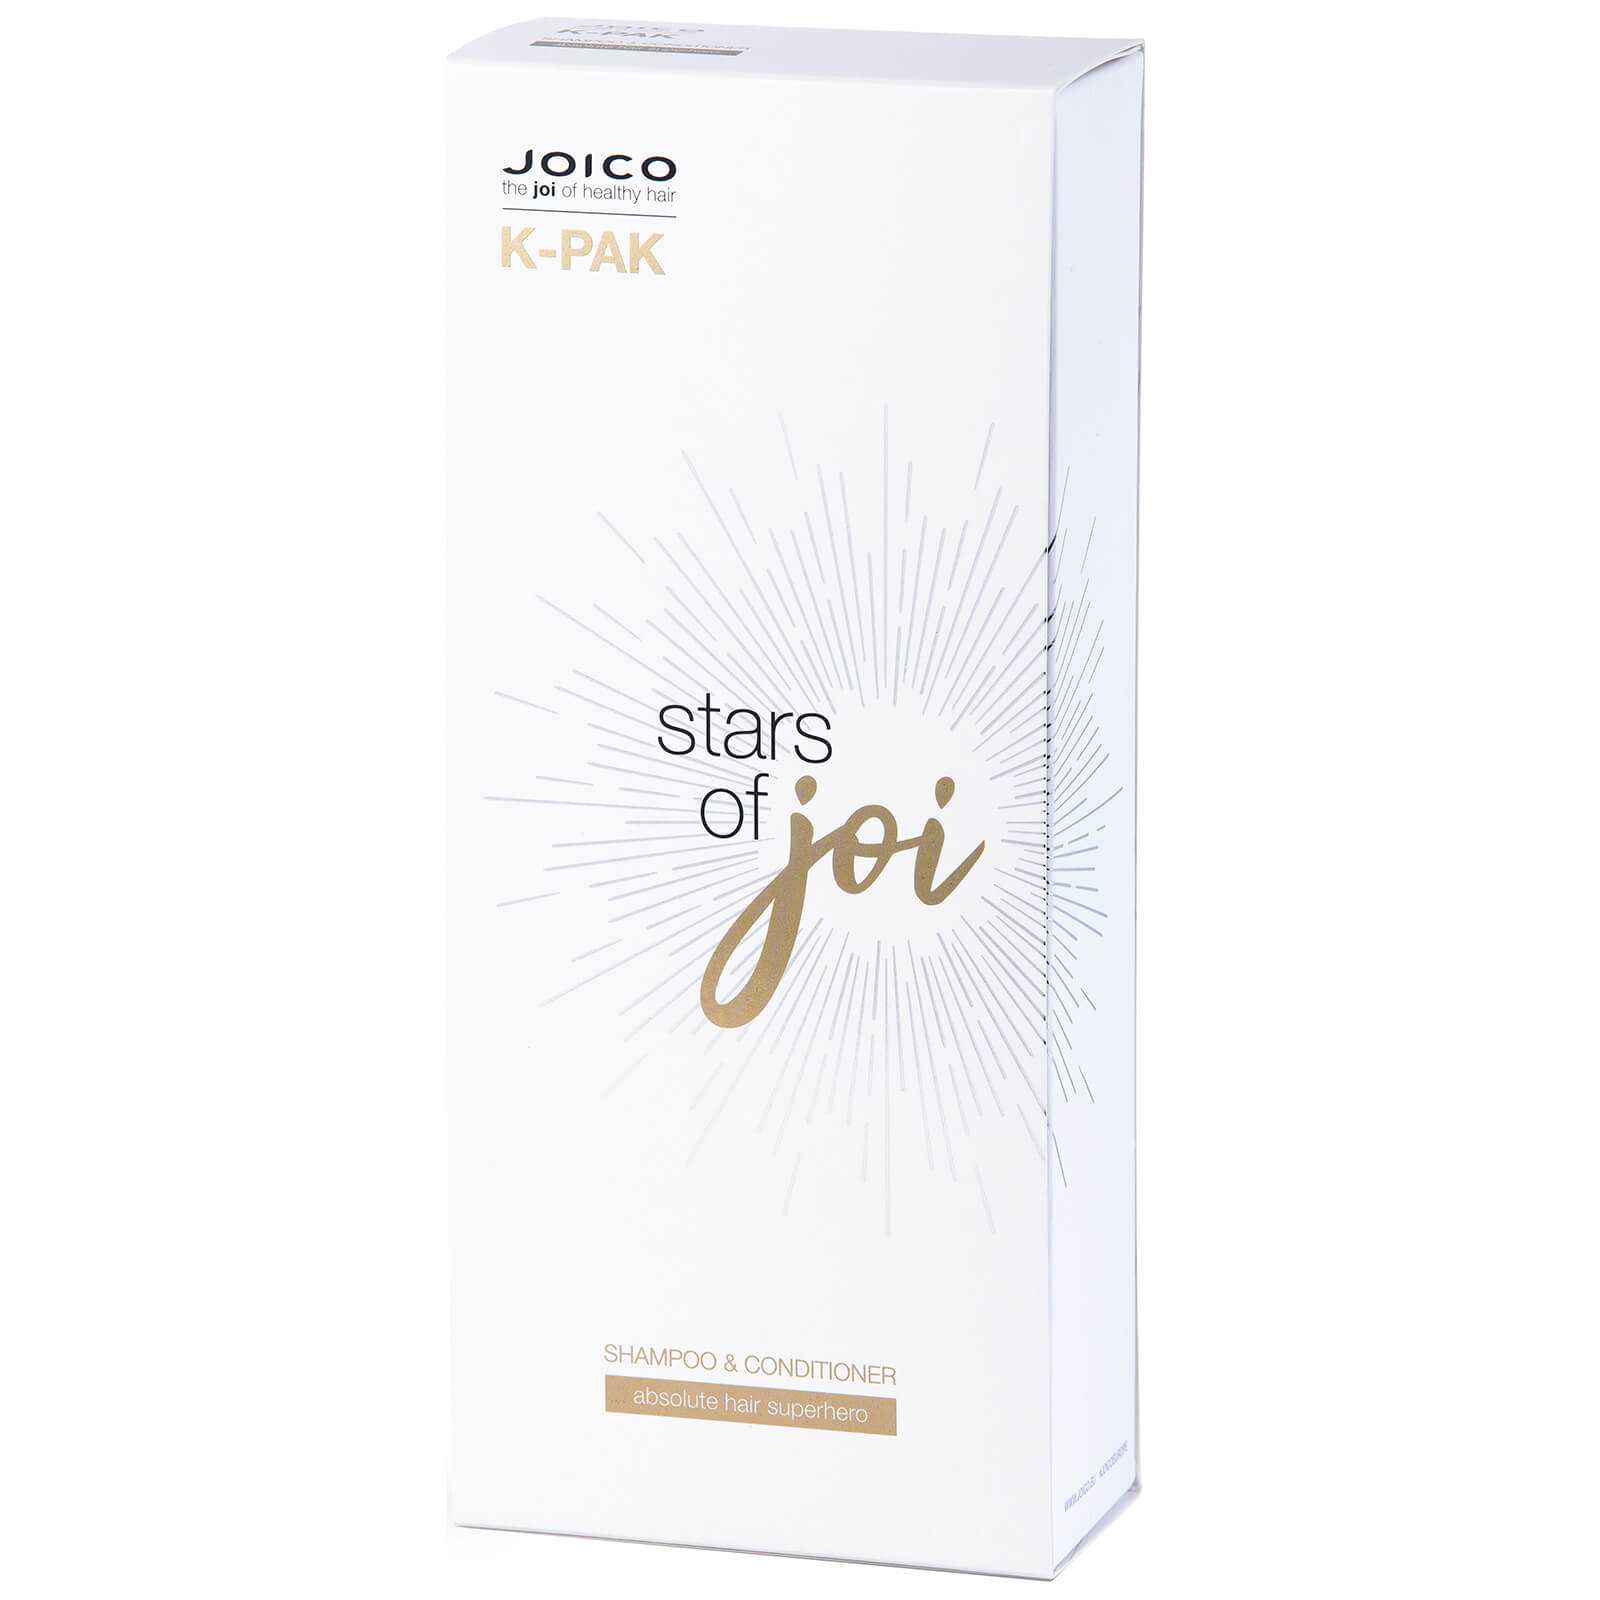 Joico Stars of Joi K-Pak Shampoo and Conditioner 300ml